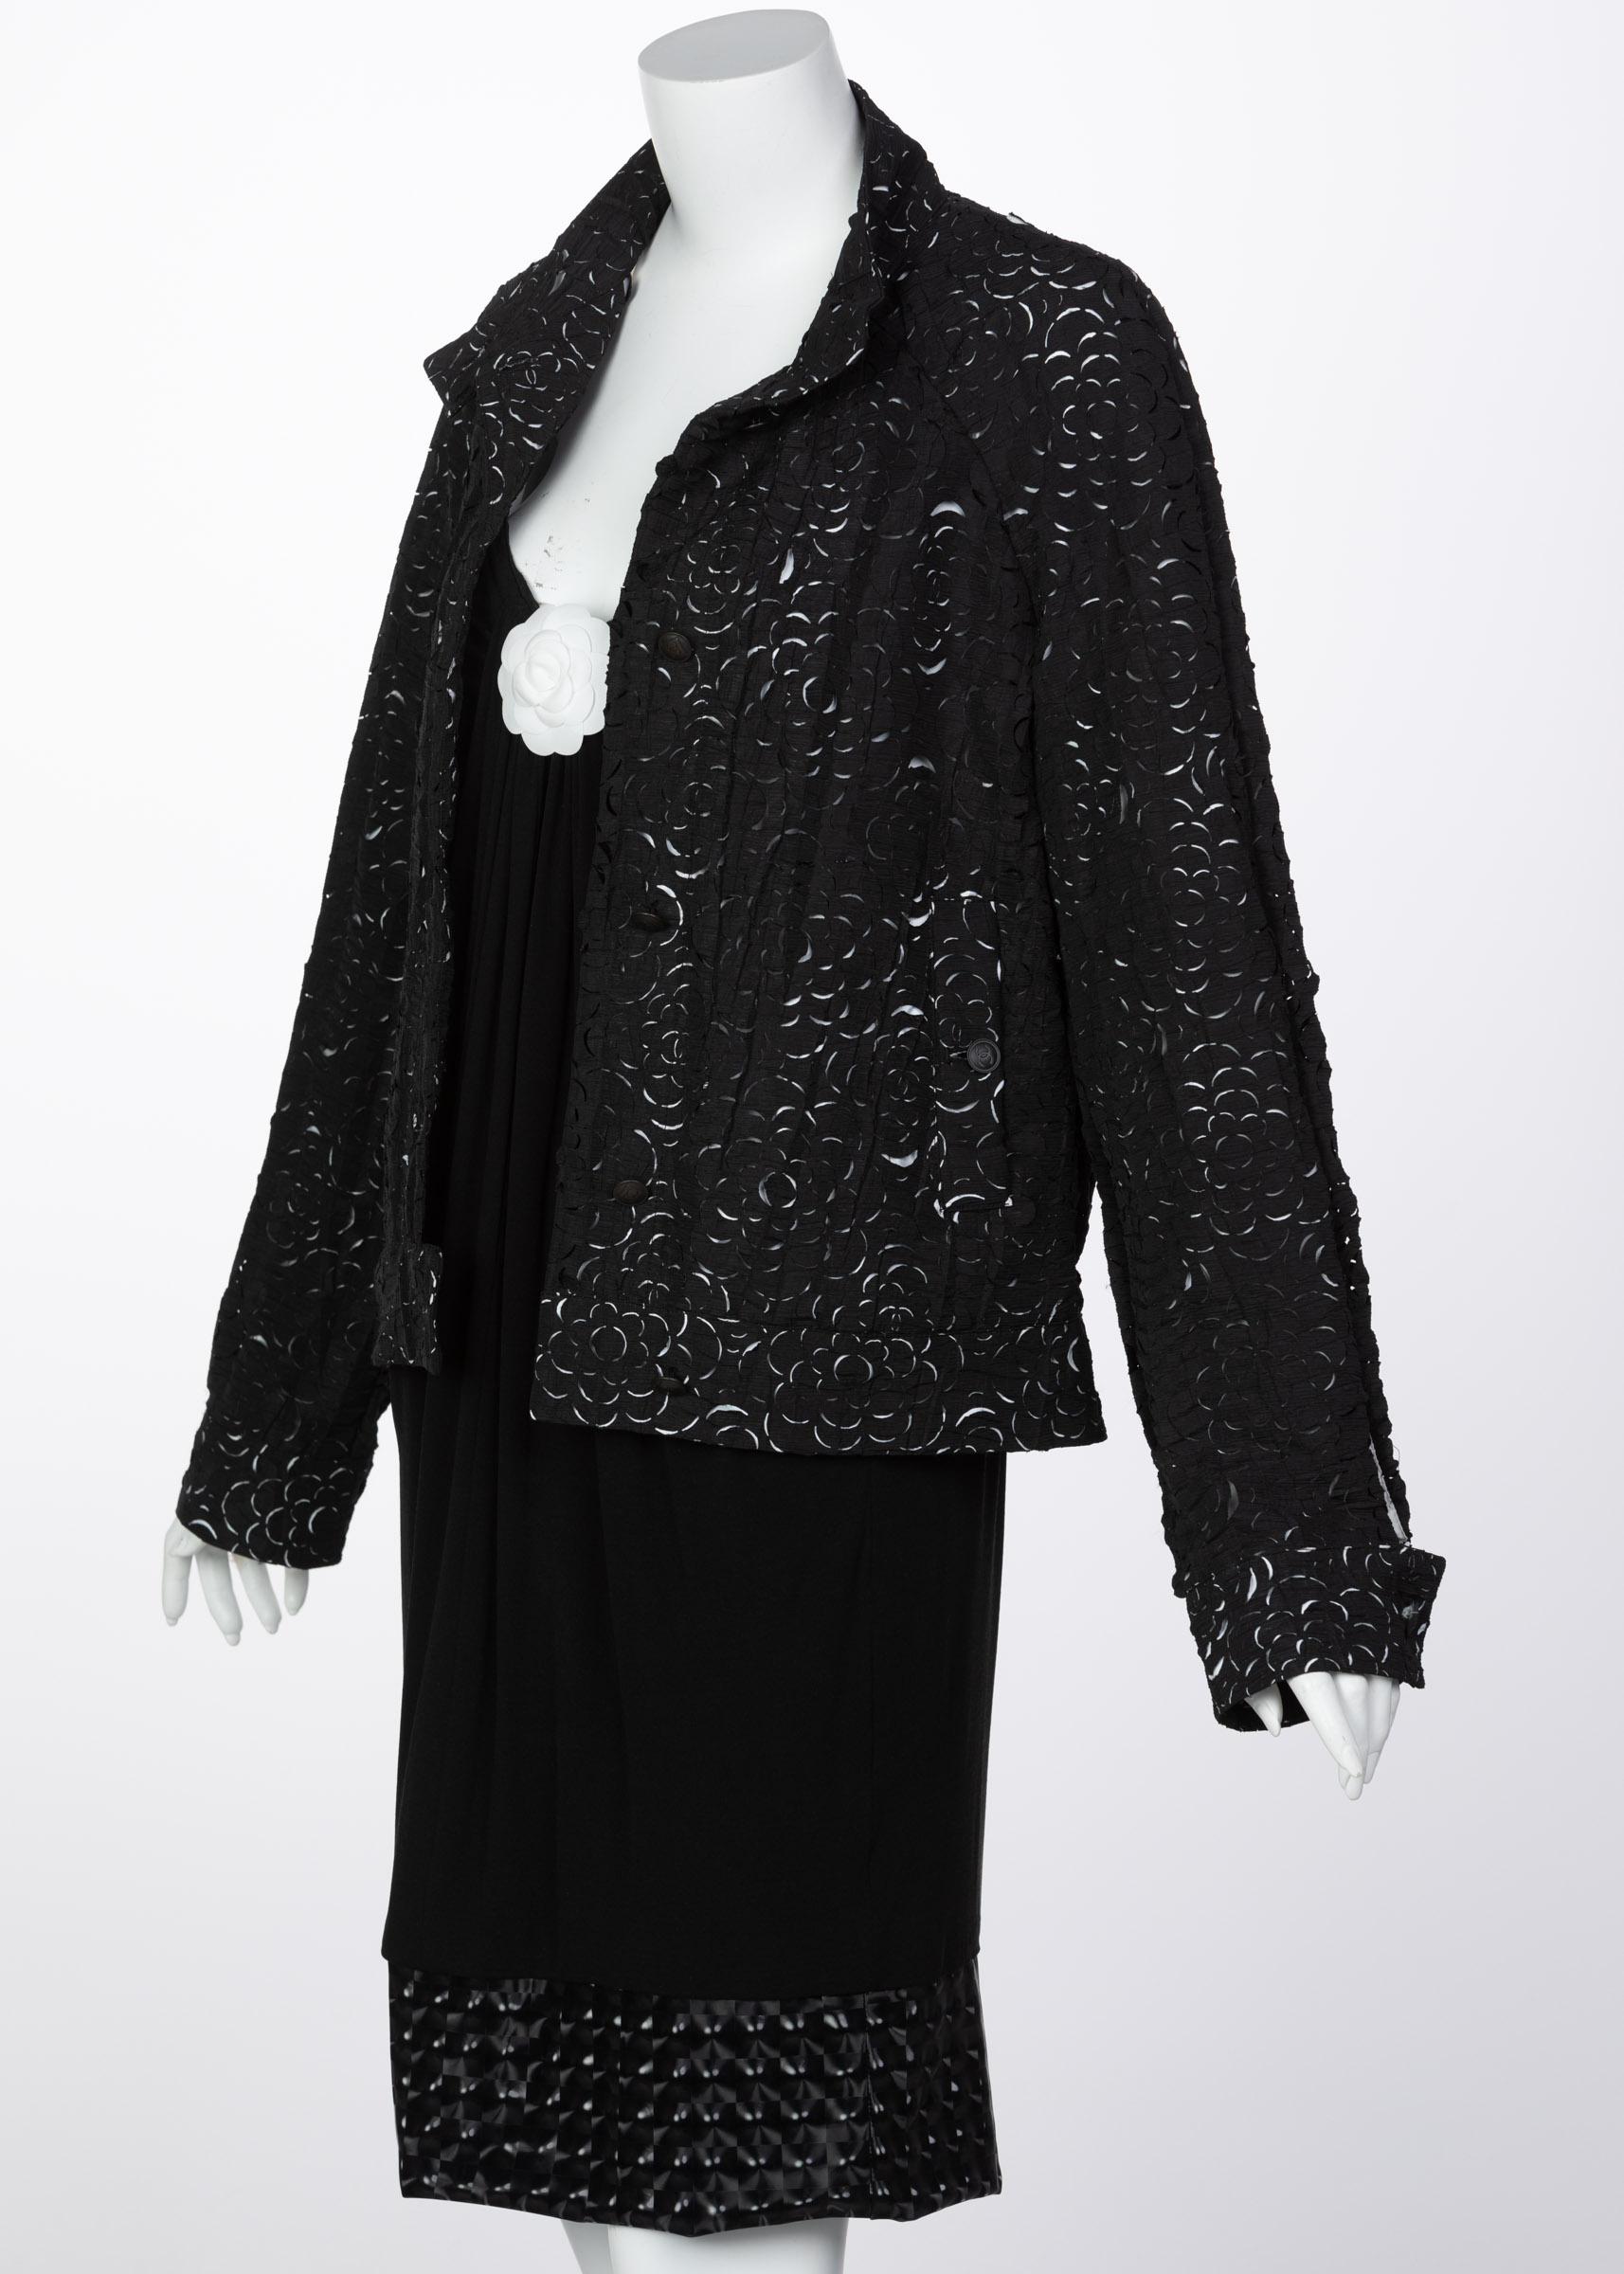 Chanel Sleeveless Black Cocktail Dress Camellia Laser Cut Bomber Jacket Set, 6